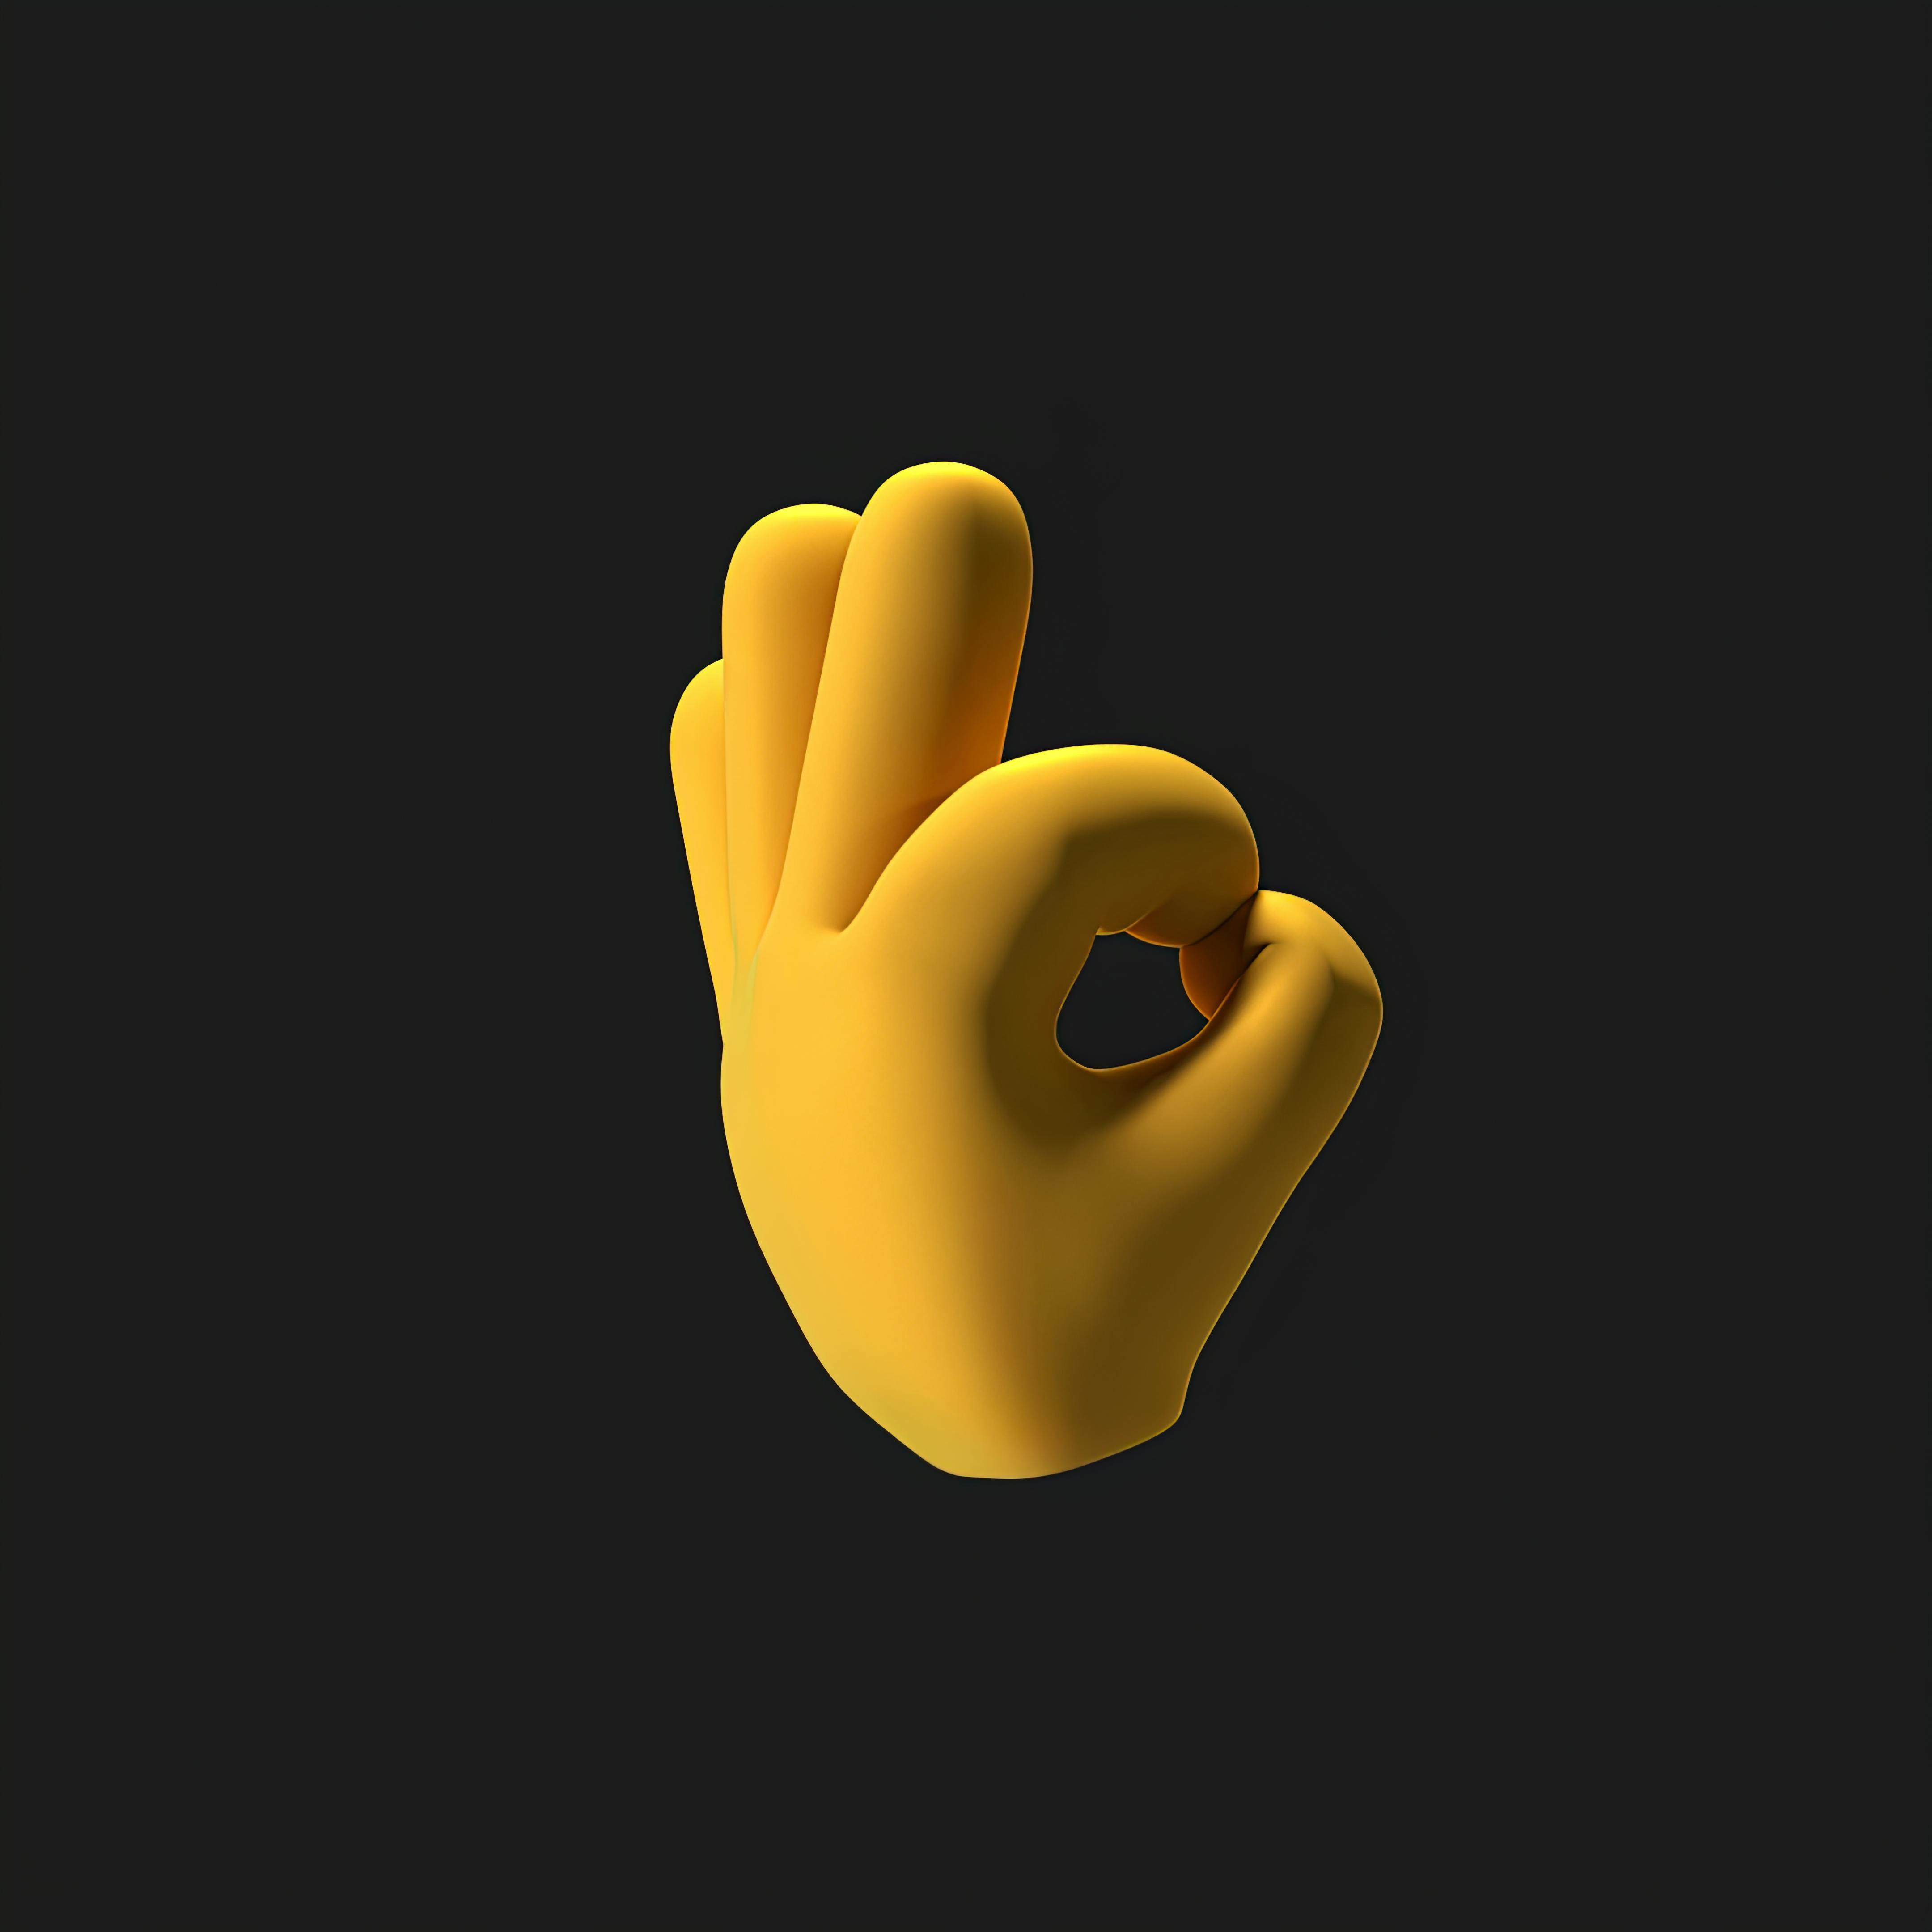 An Emoji Hand on Black Background · Free Stock Photo